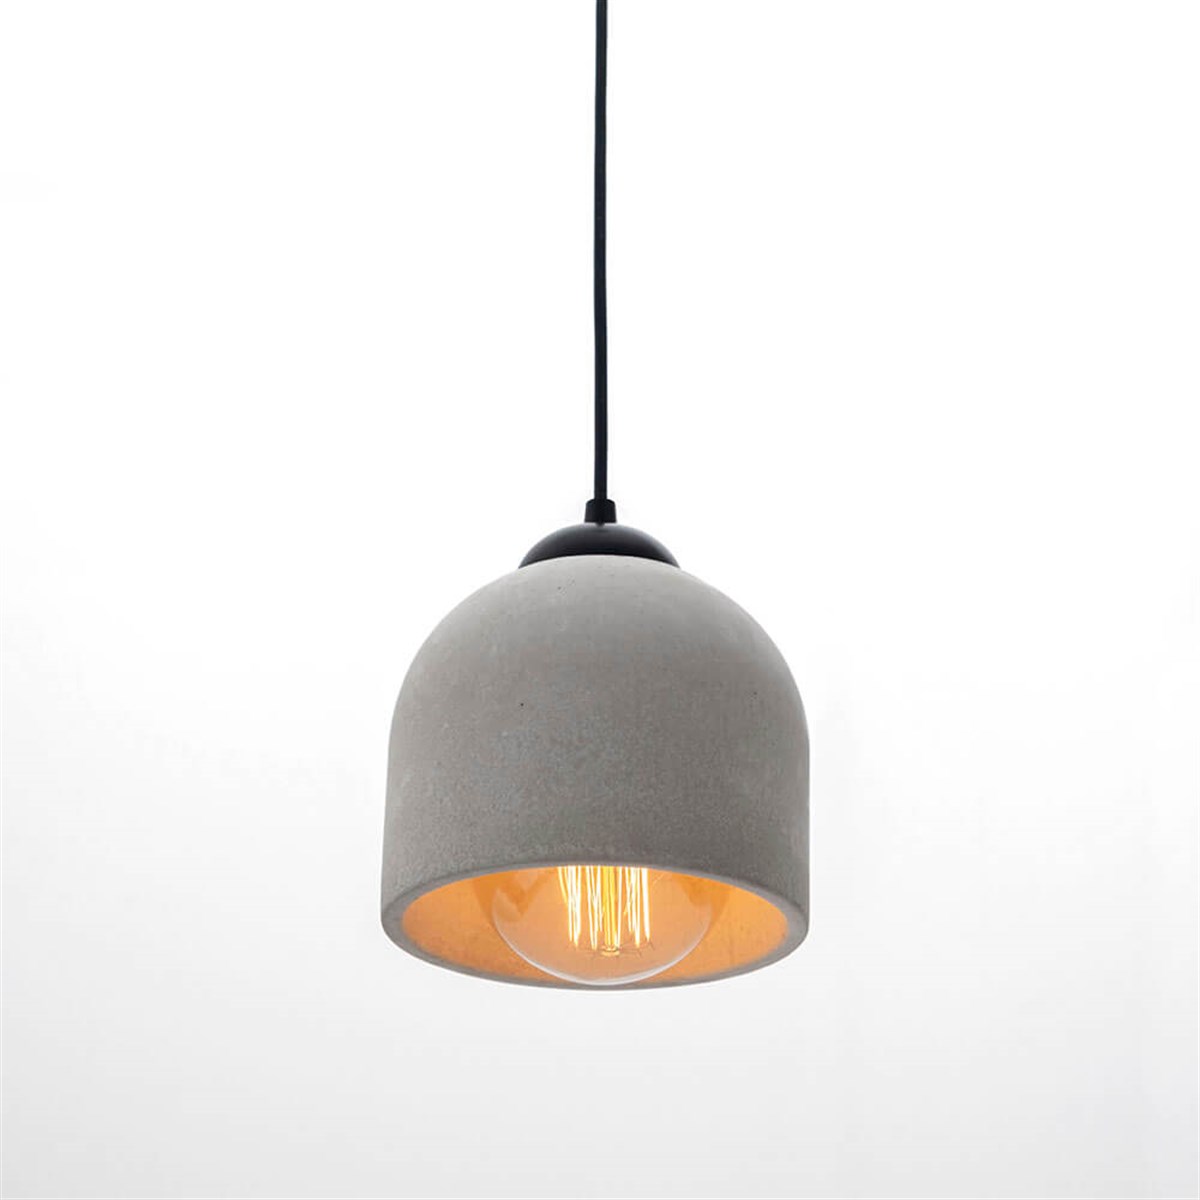 Black Concrete Pendant Lamp, Modern Pendant Lamp